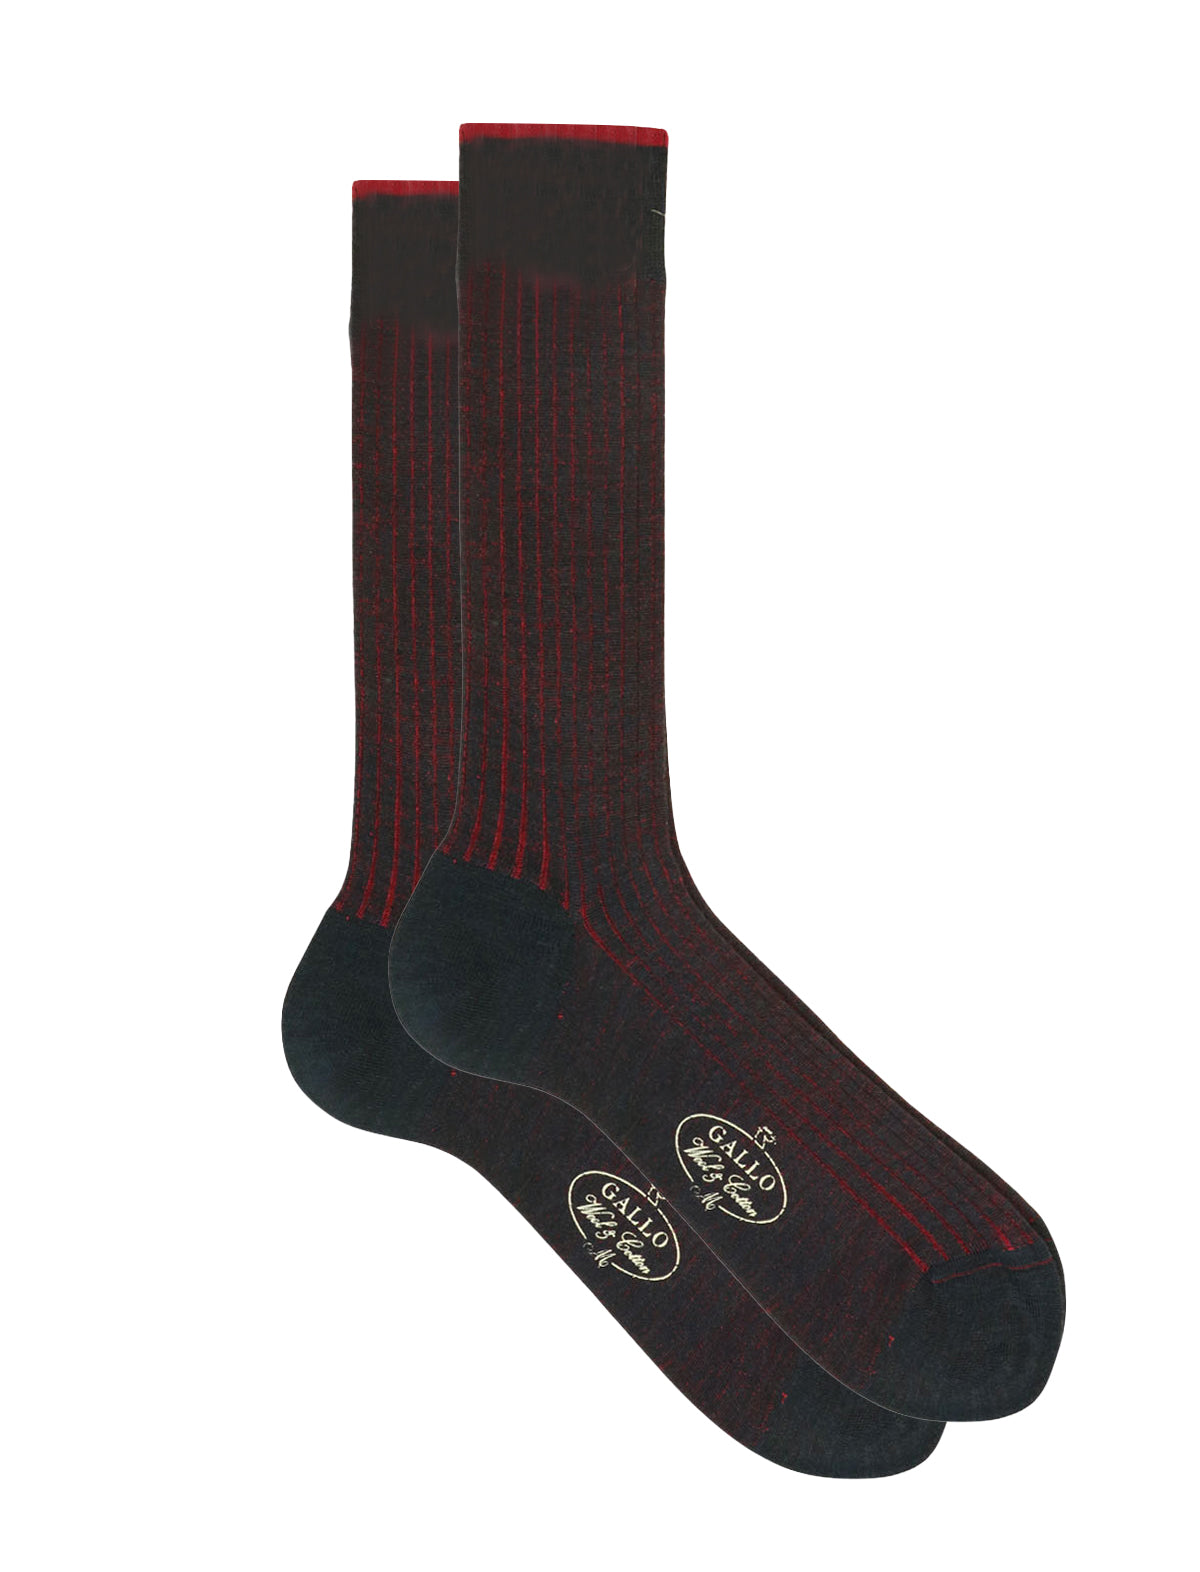 Gallo High Socks in Black w/ Red Pinstripes